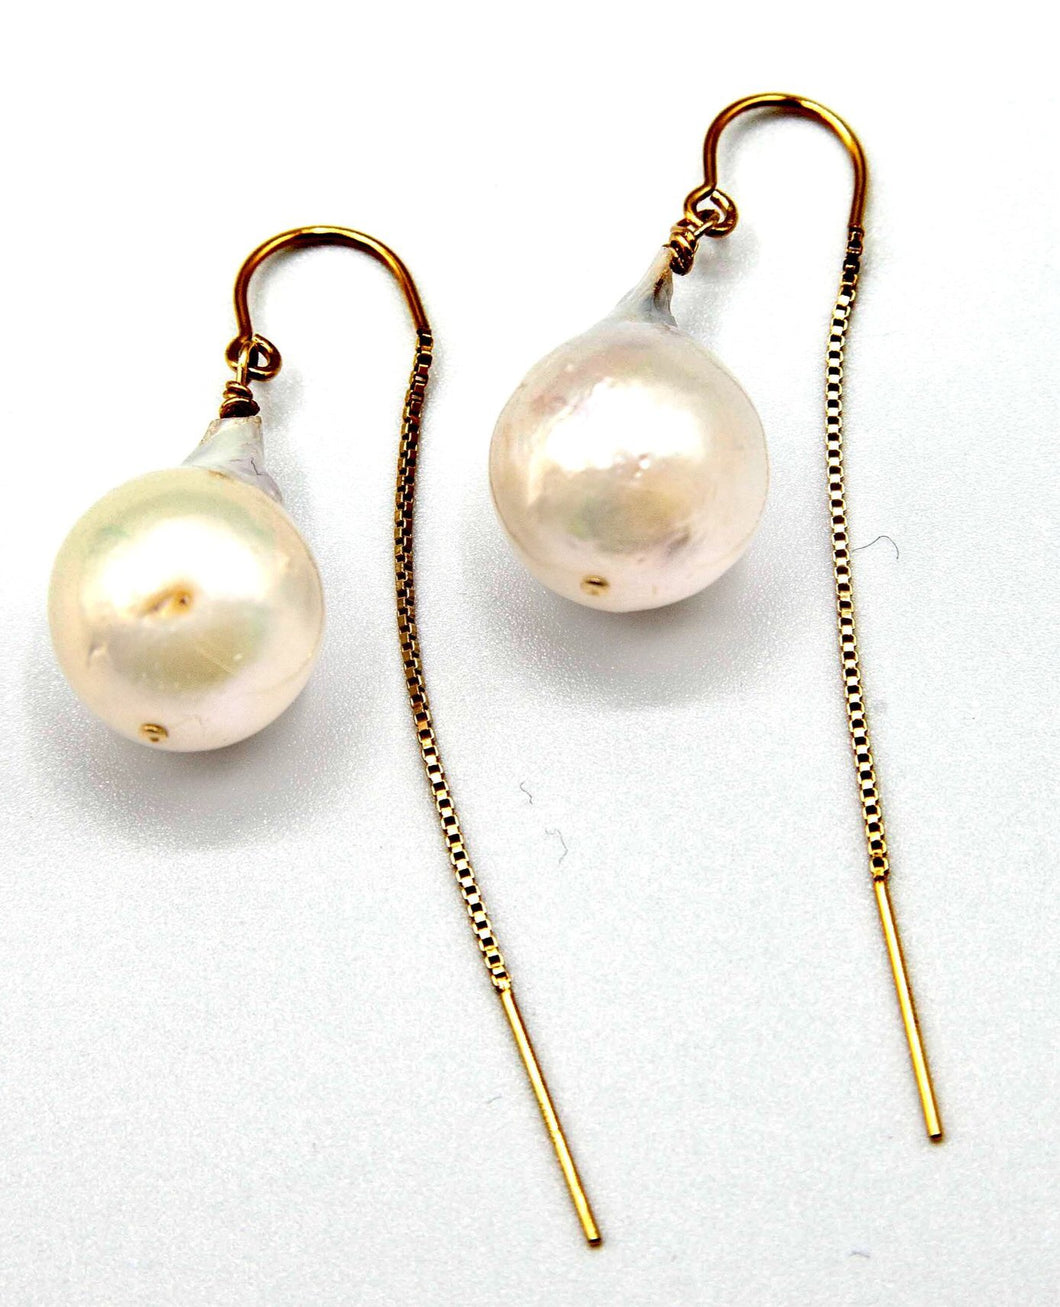 The Hope Baroque Pearl threader earrings